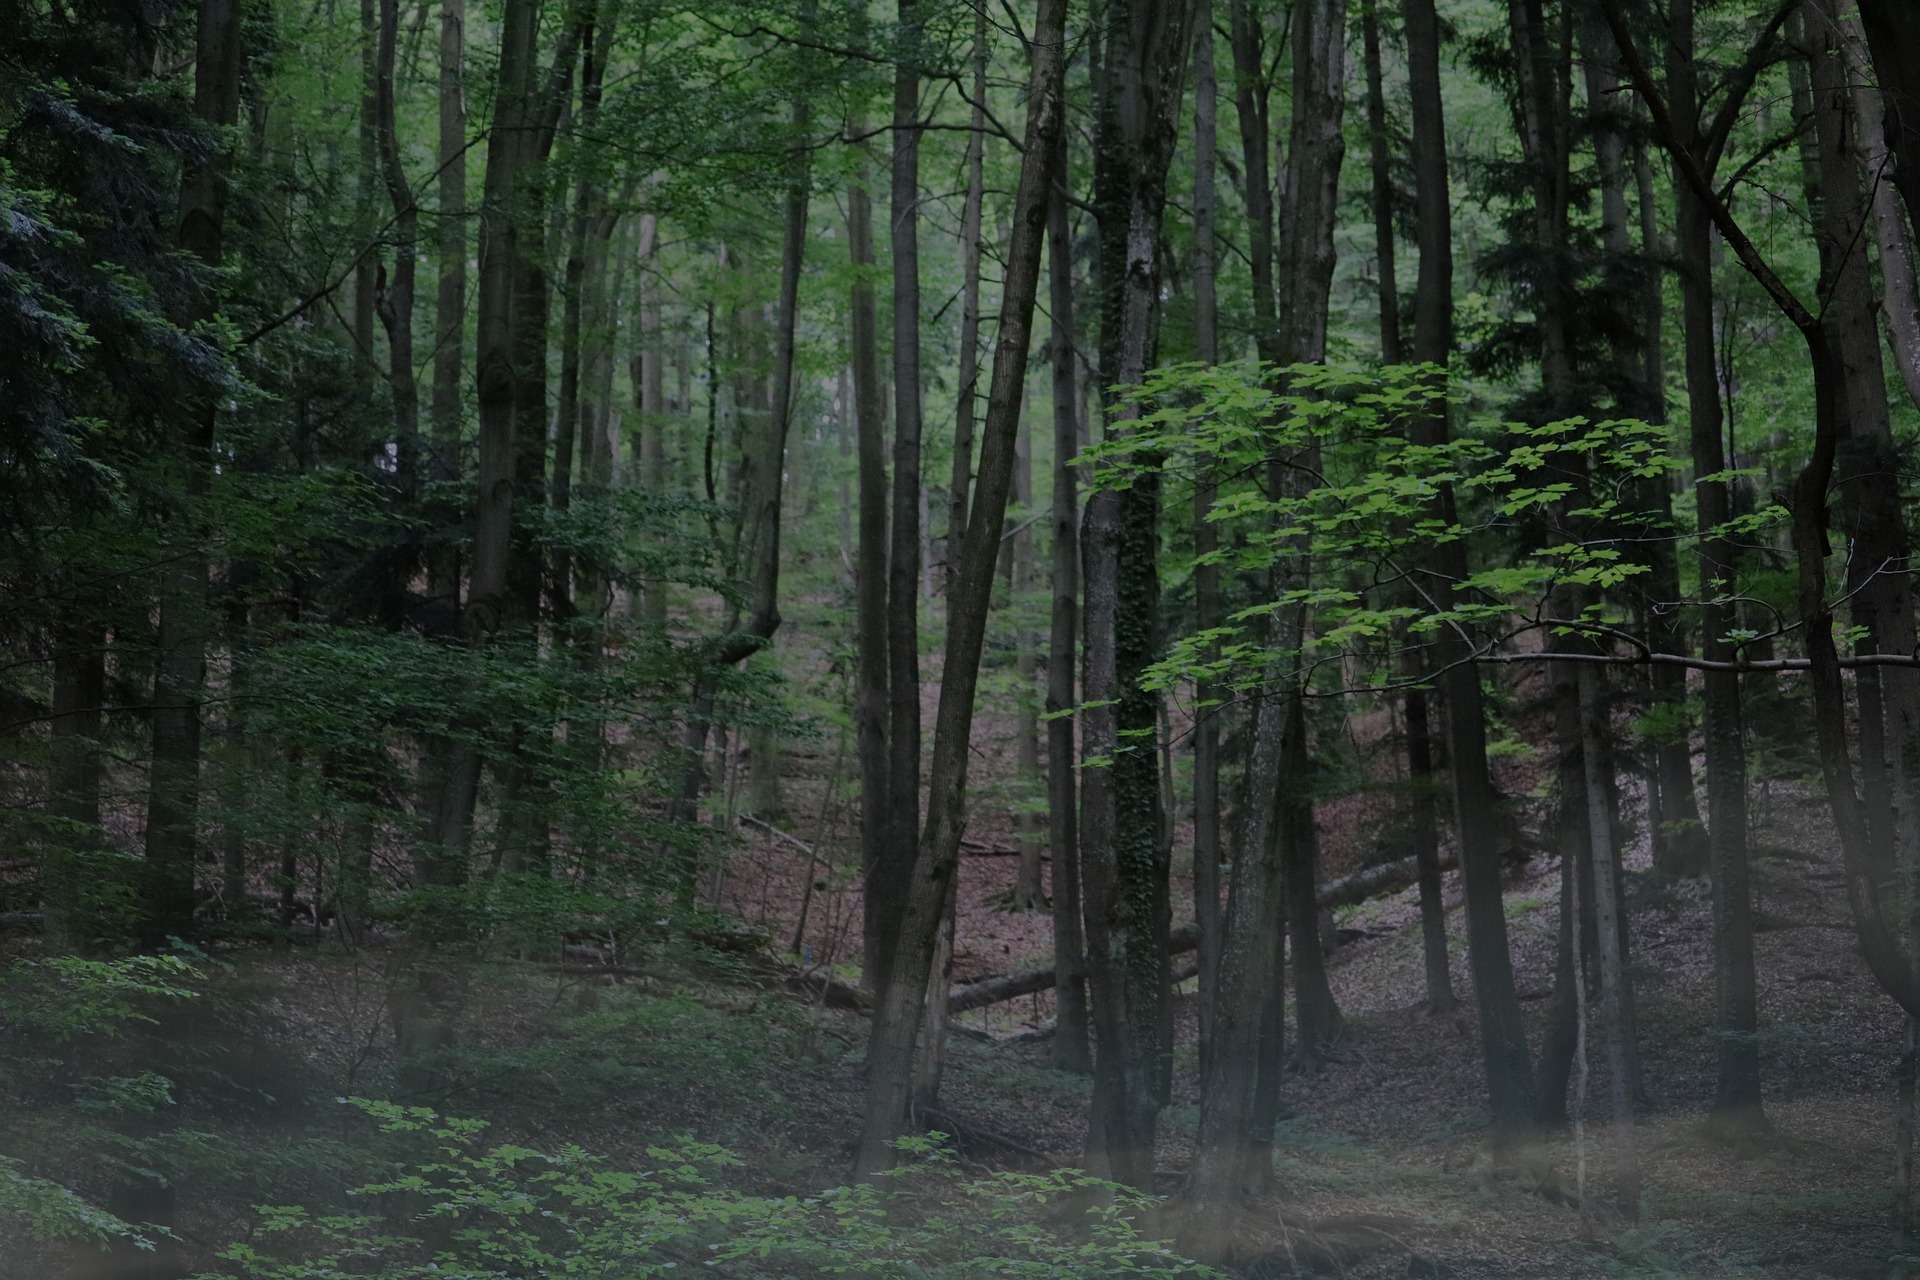 Bild: Wald, Naturverbundenheit (c) Fleimax